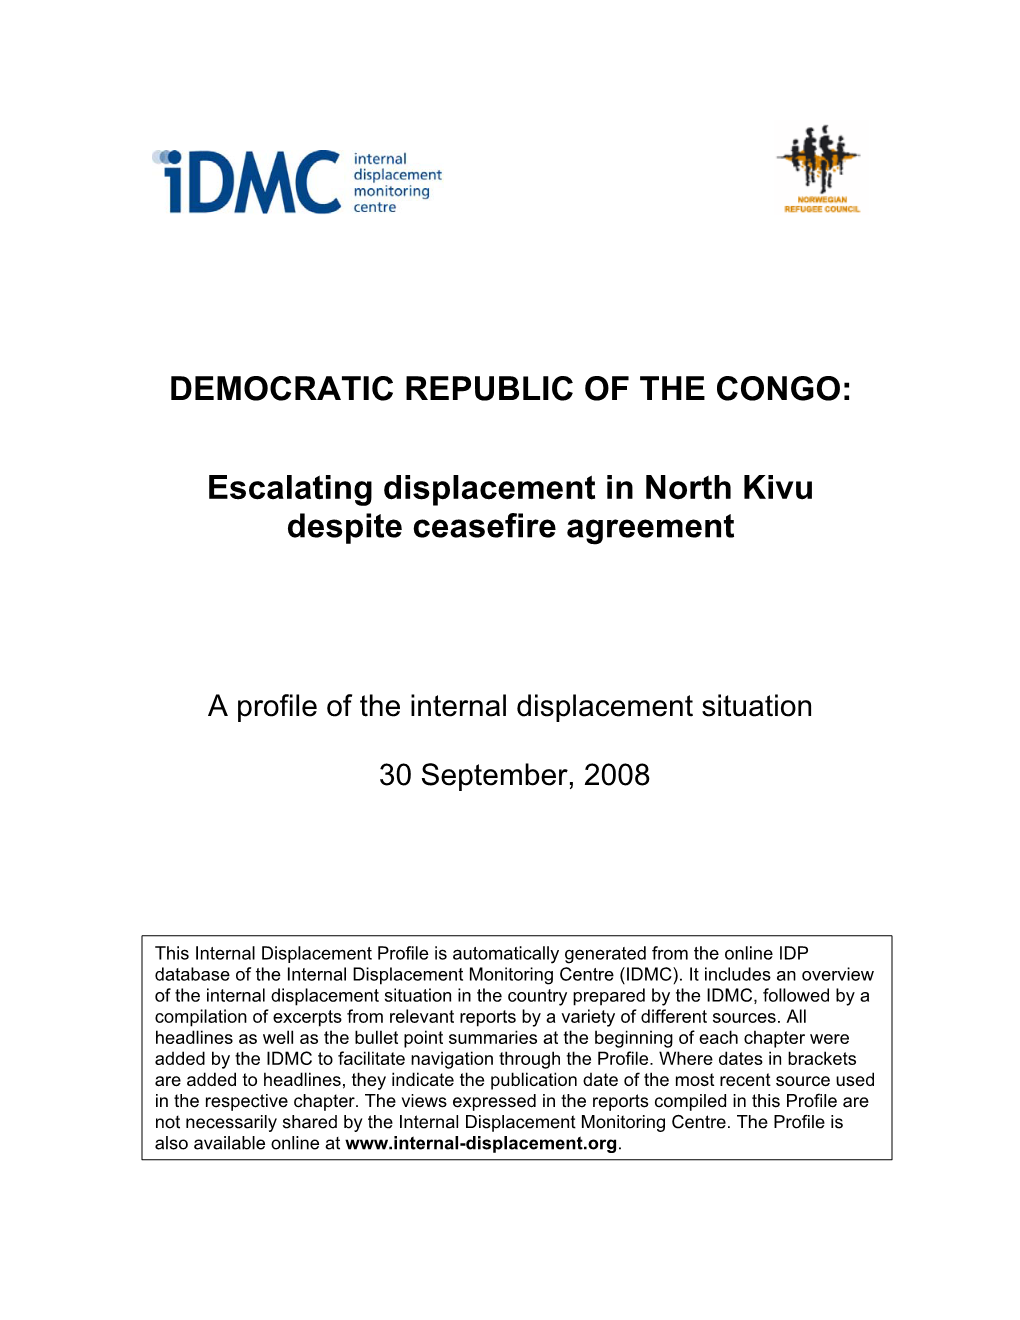 DEMOCRATIC REPUBLIC of the CONGO: Escalating Displacement in North Kivu Despite Ceasefire Agreement